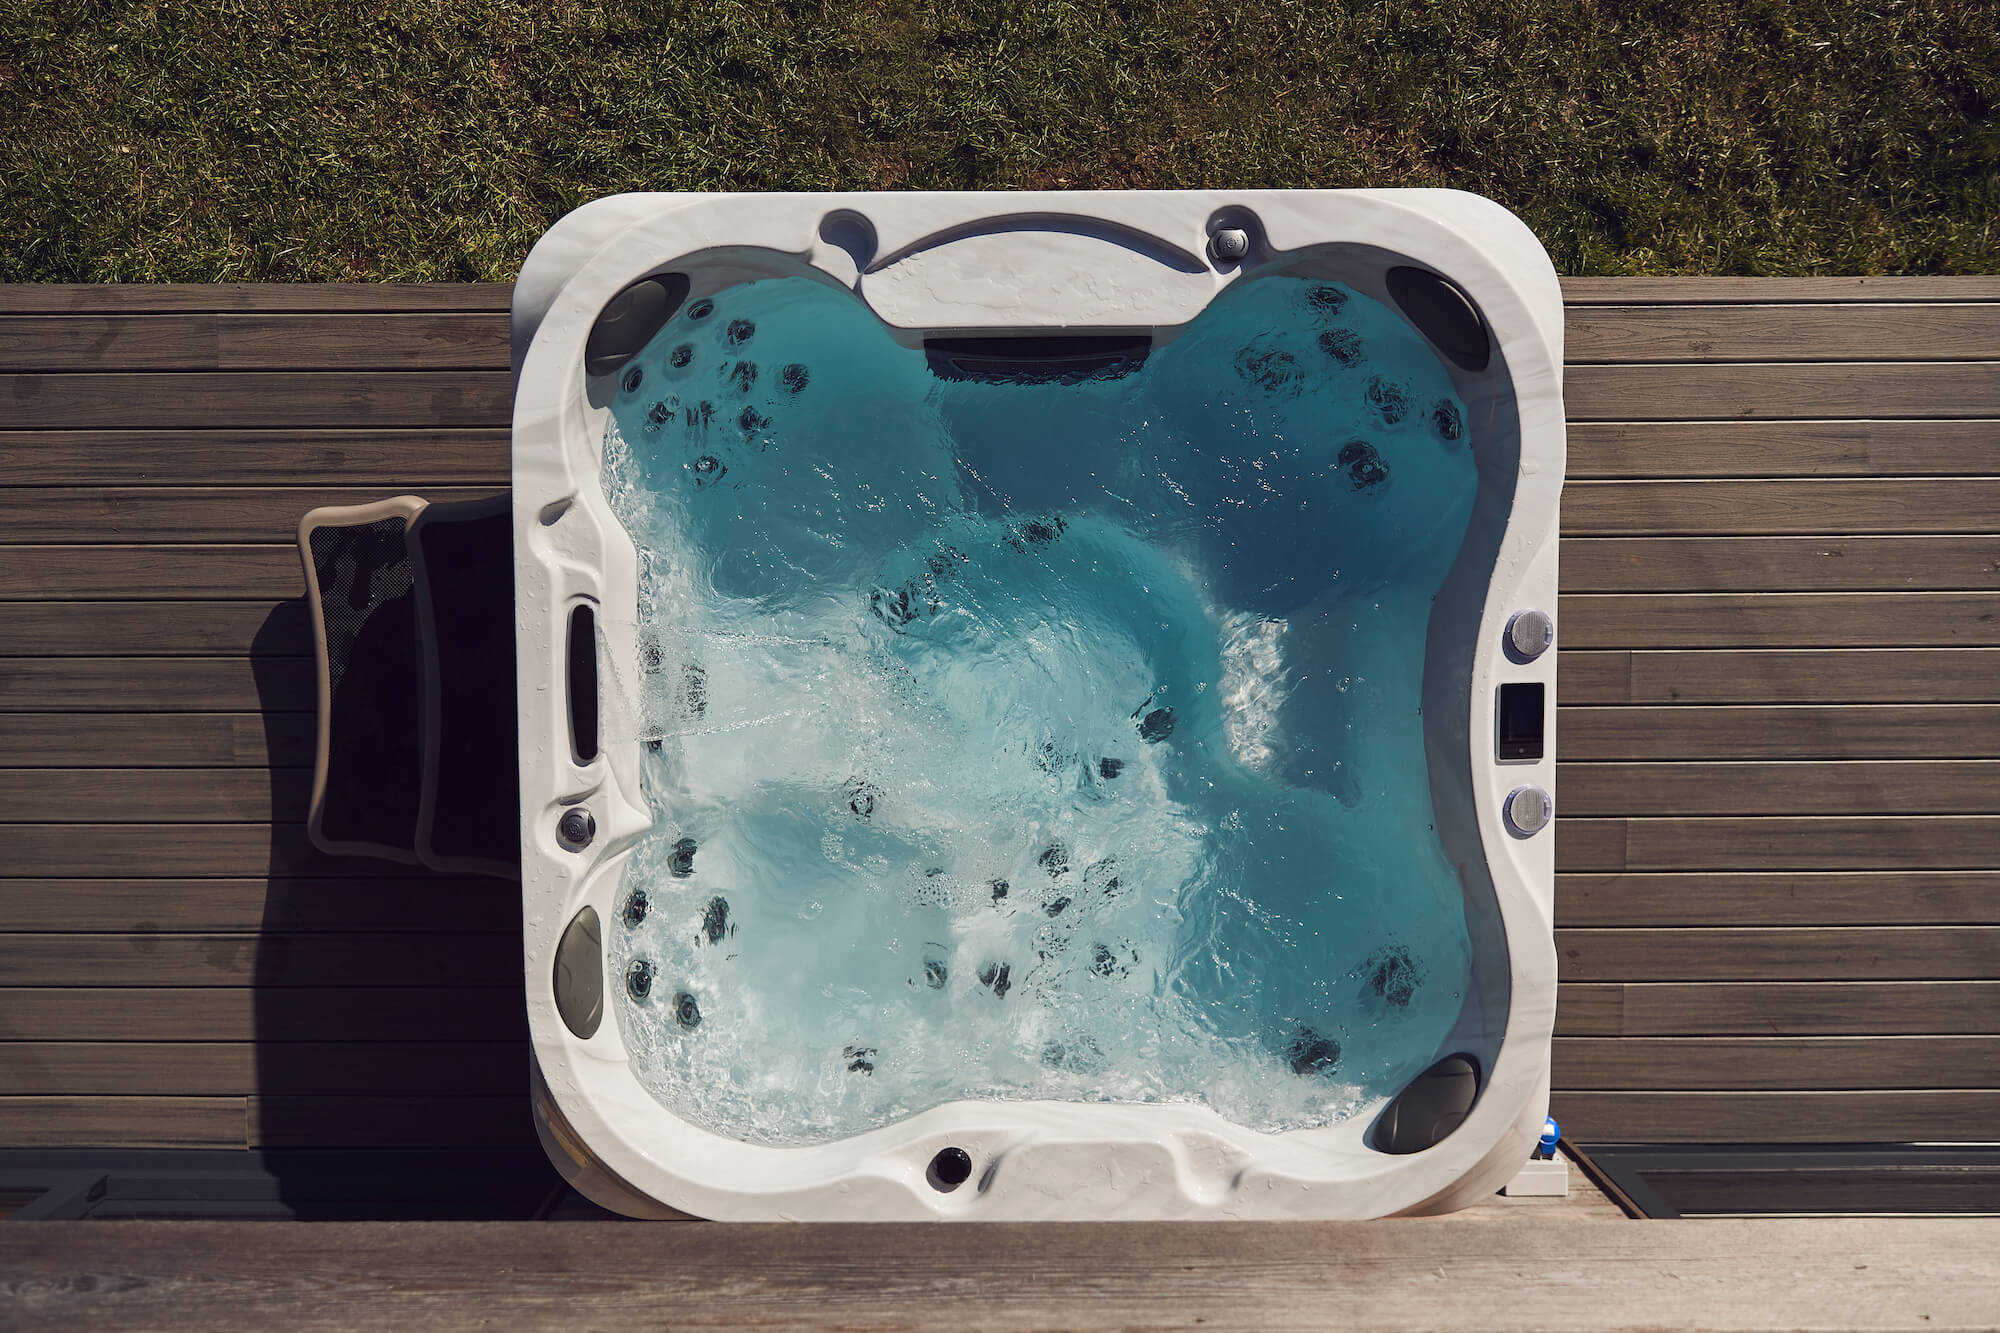 Hot tub garden design ideas | Just Hot Tubs